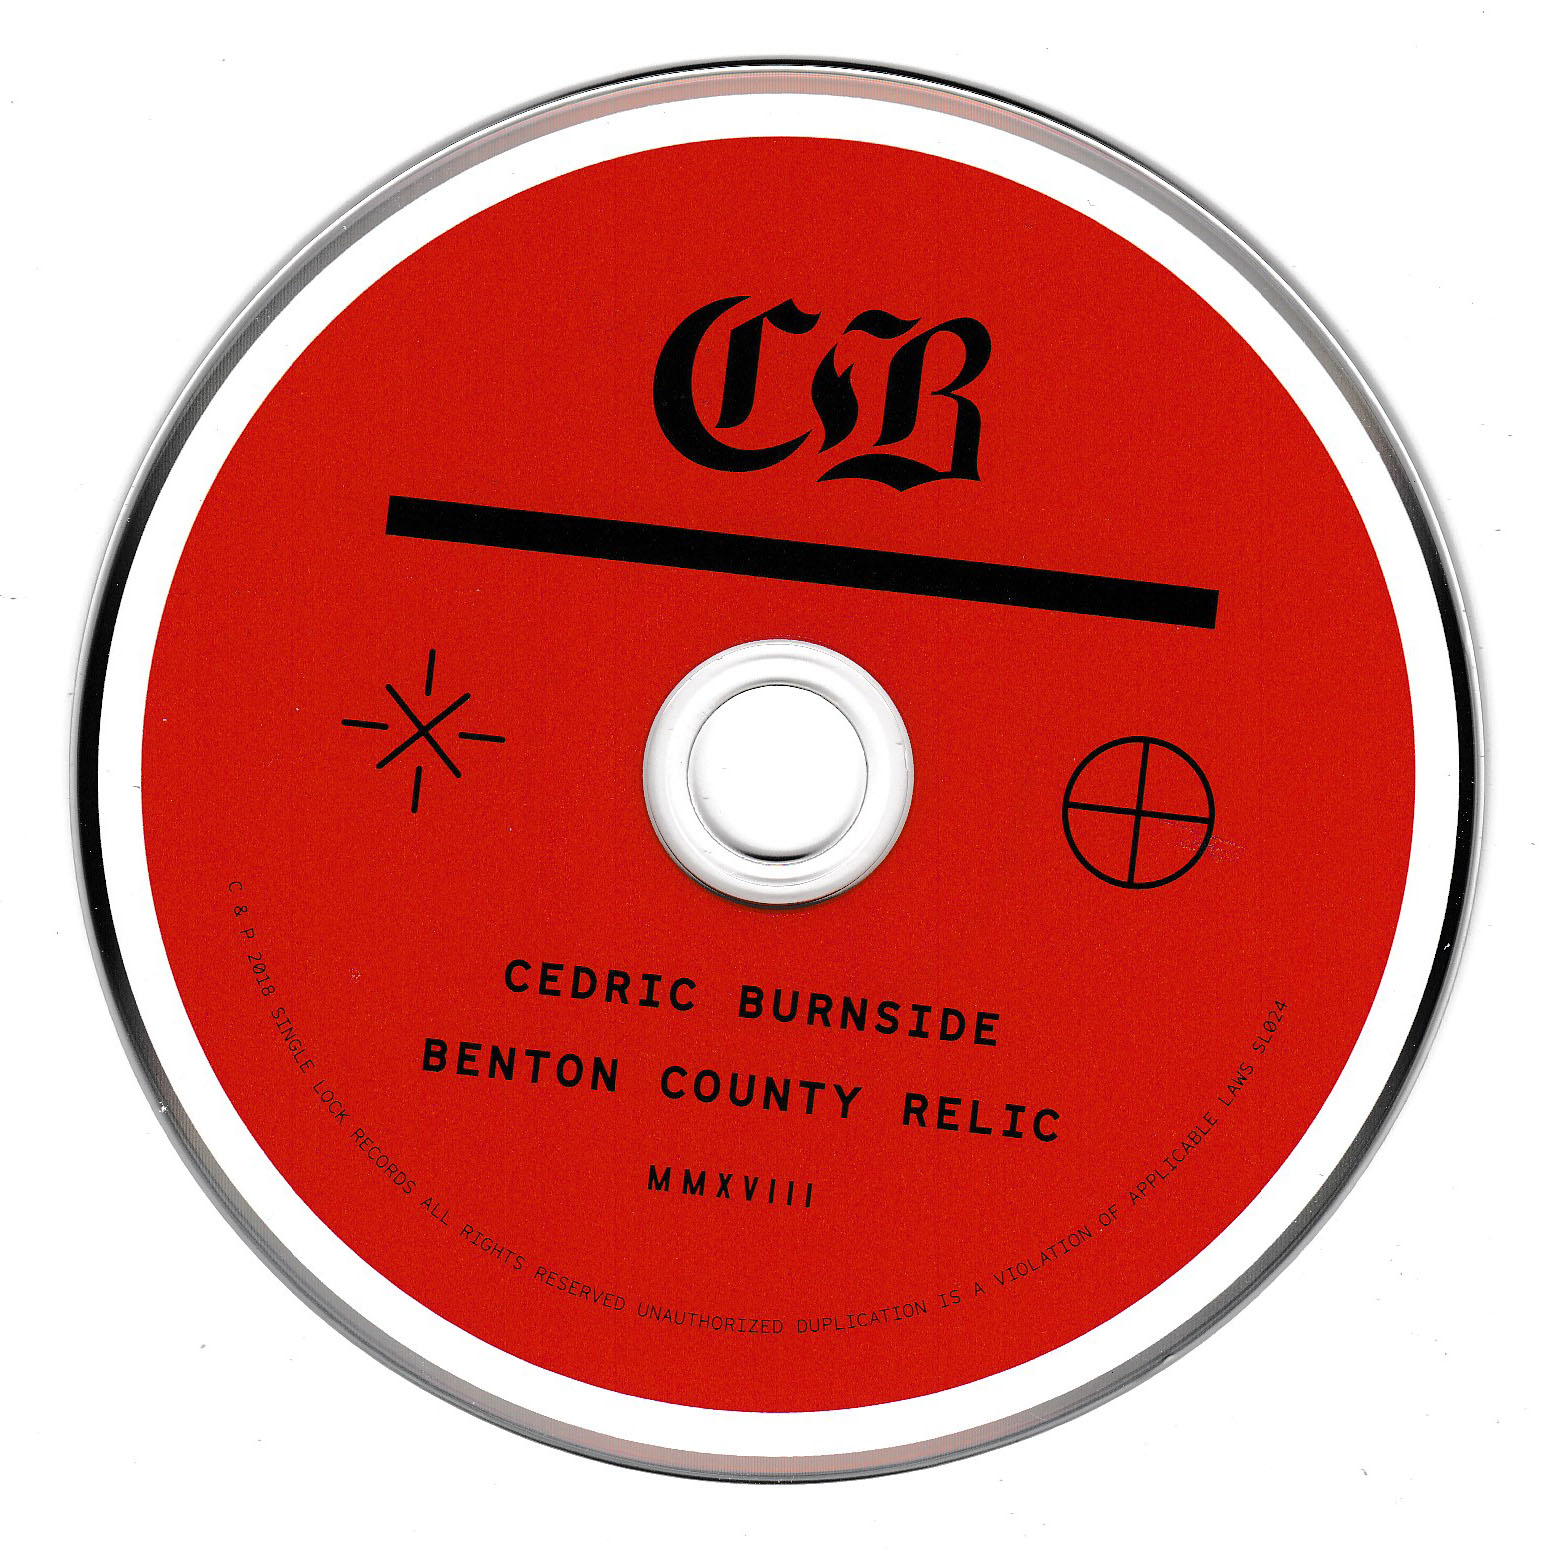 Cedric Burnside - Benton County Relic - CD